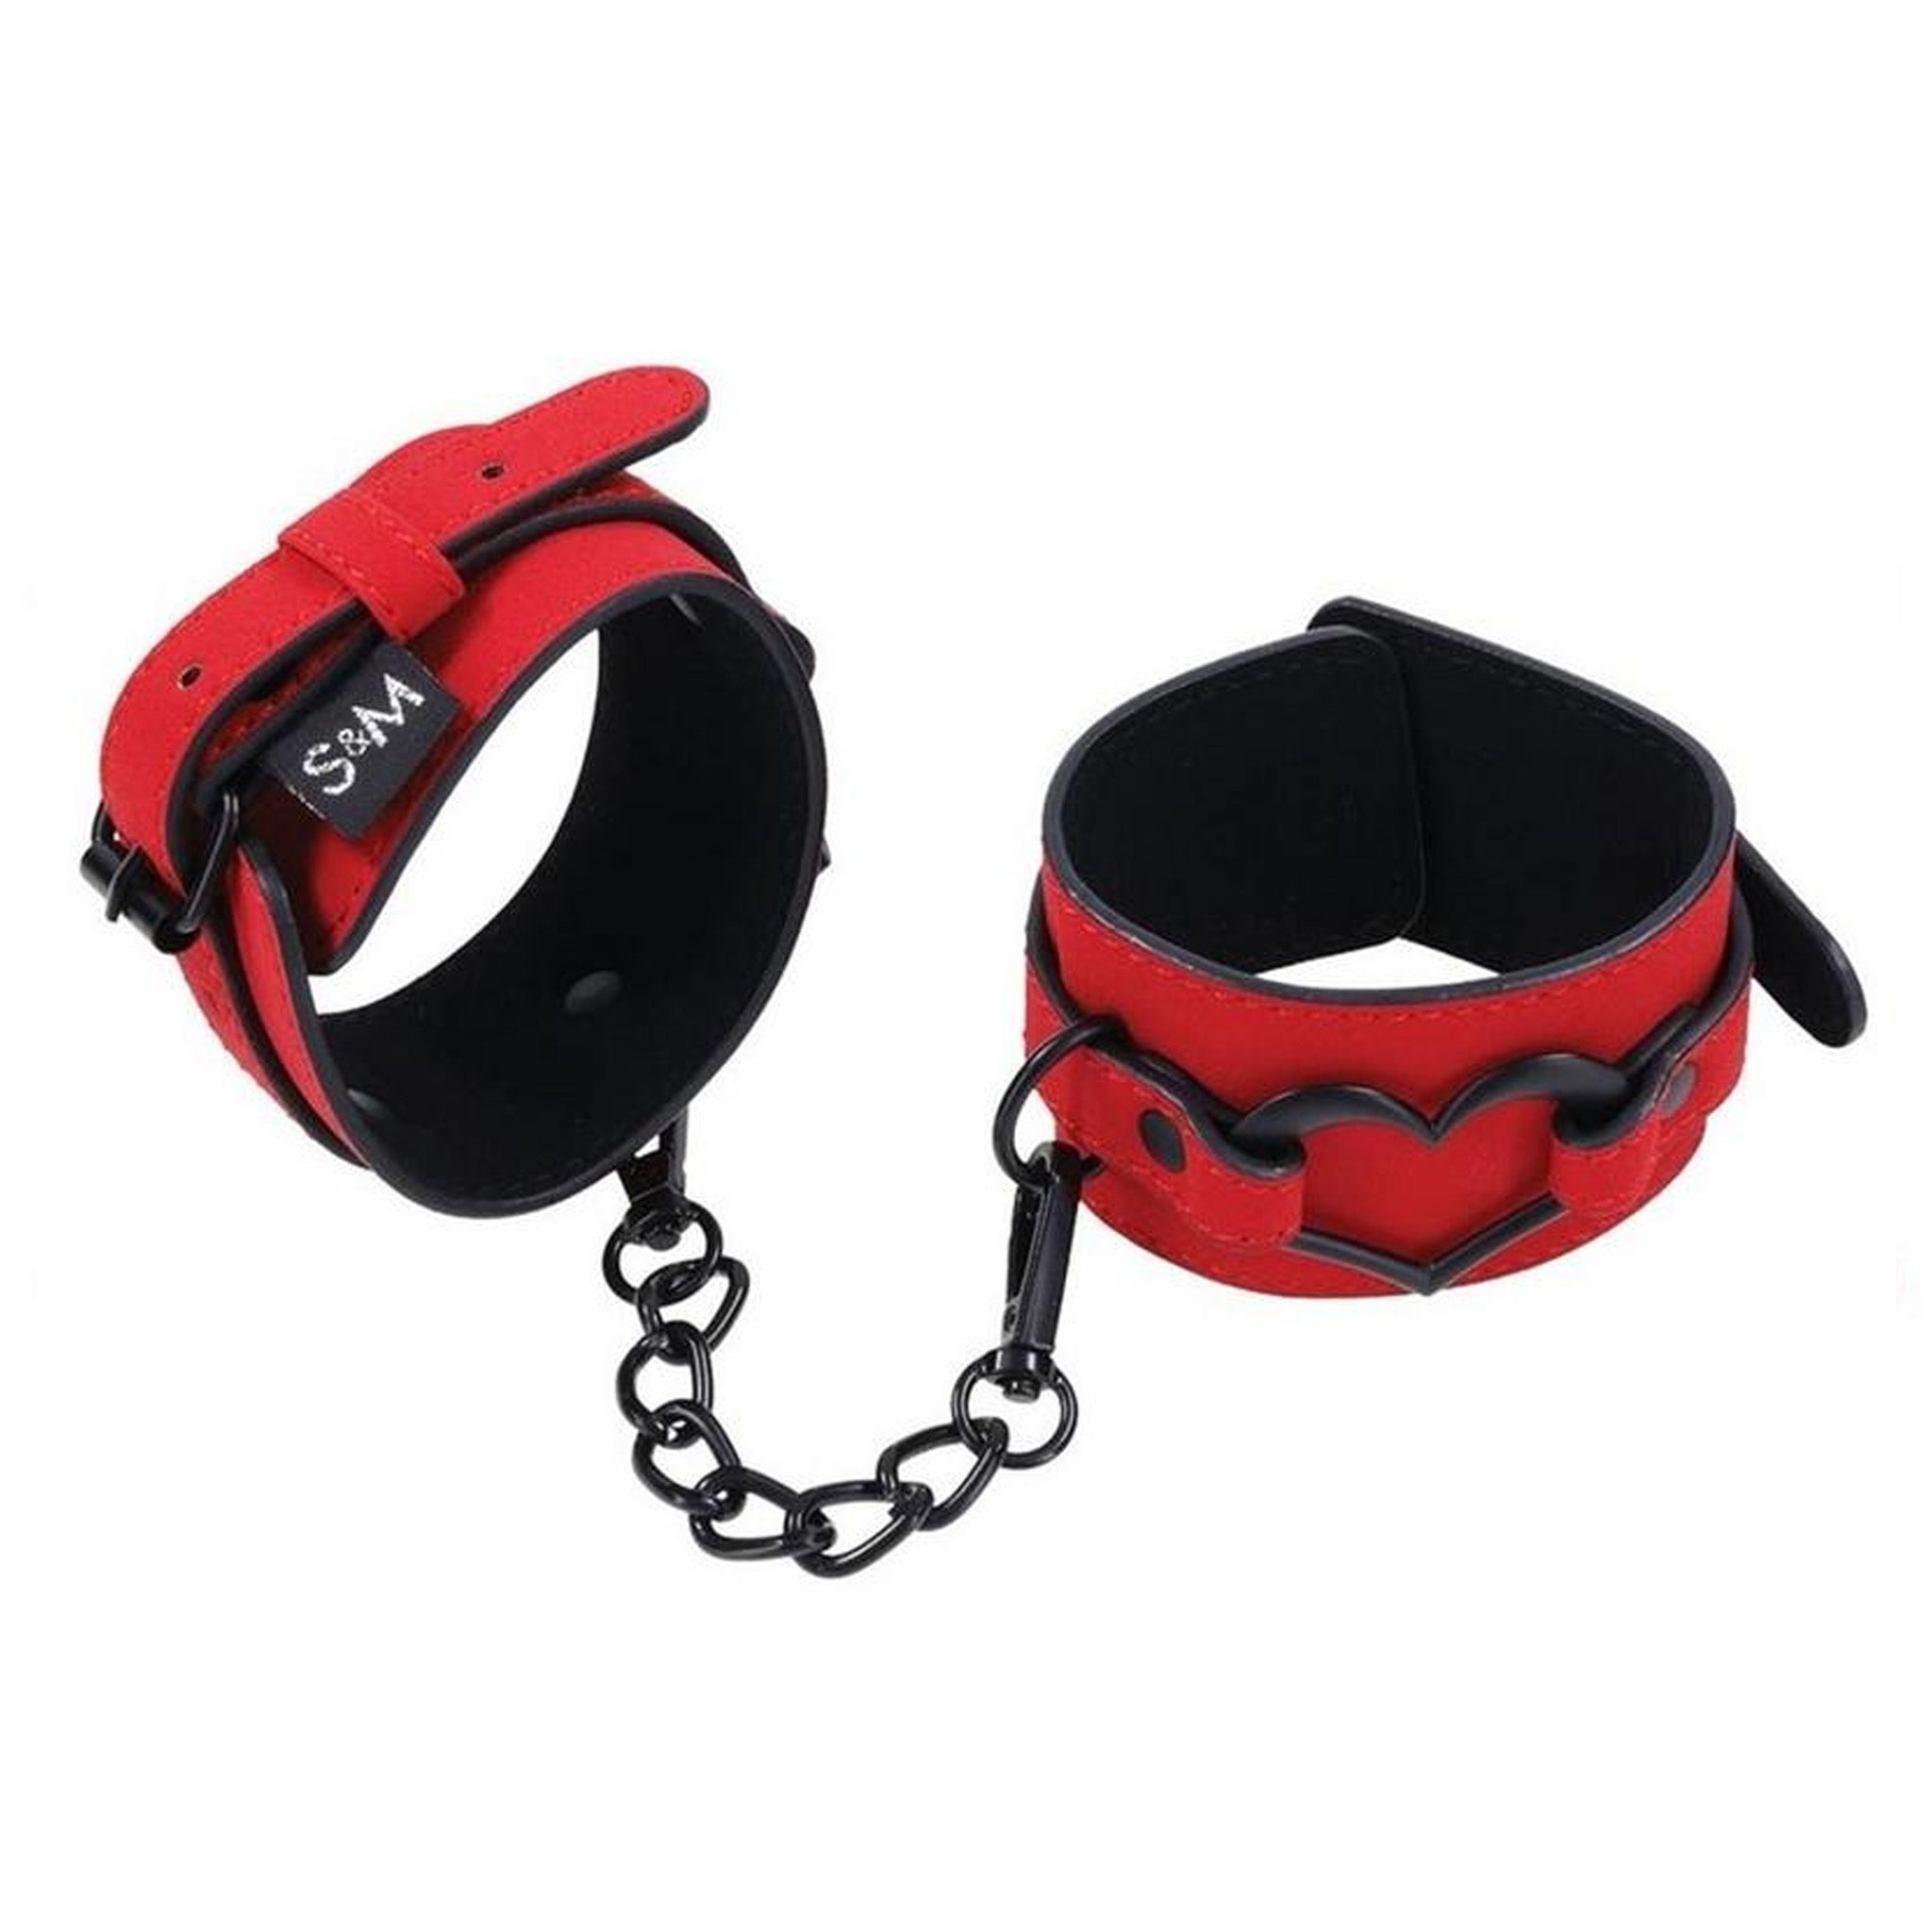 Red Wrist Cuffs with Black Heart & Chain Hardware